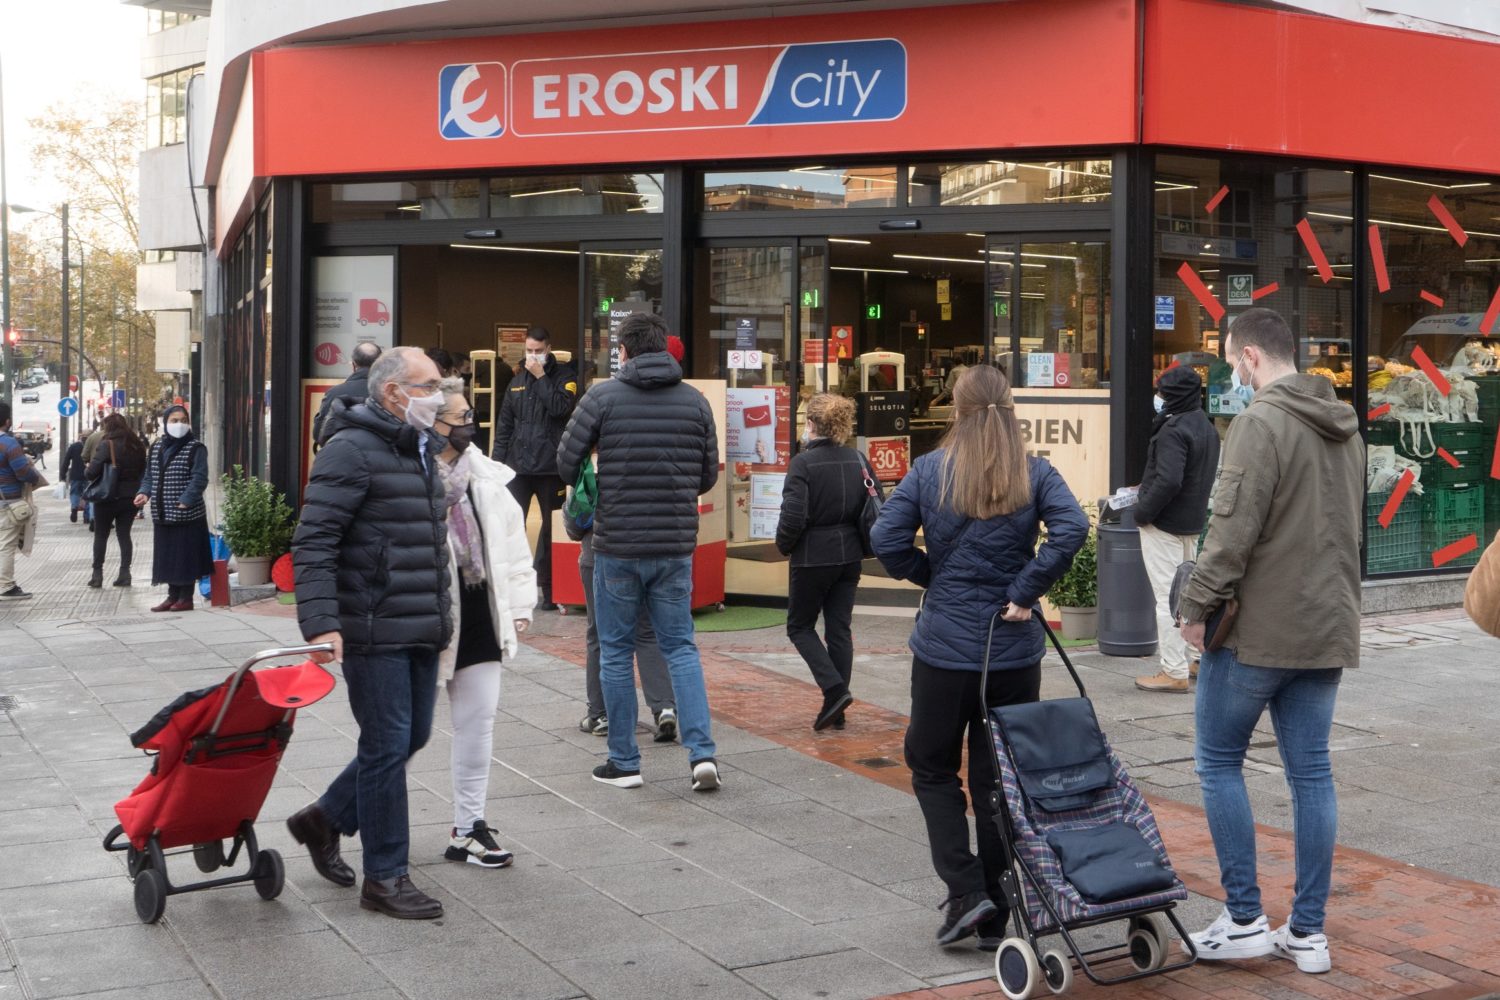 Autonomía 53 la nueva referencia de Eroski para Bilbao - Just Retail